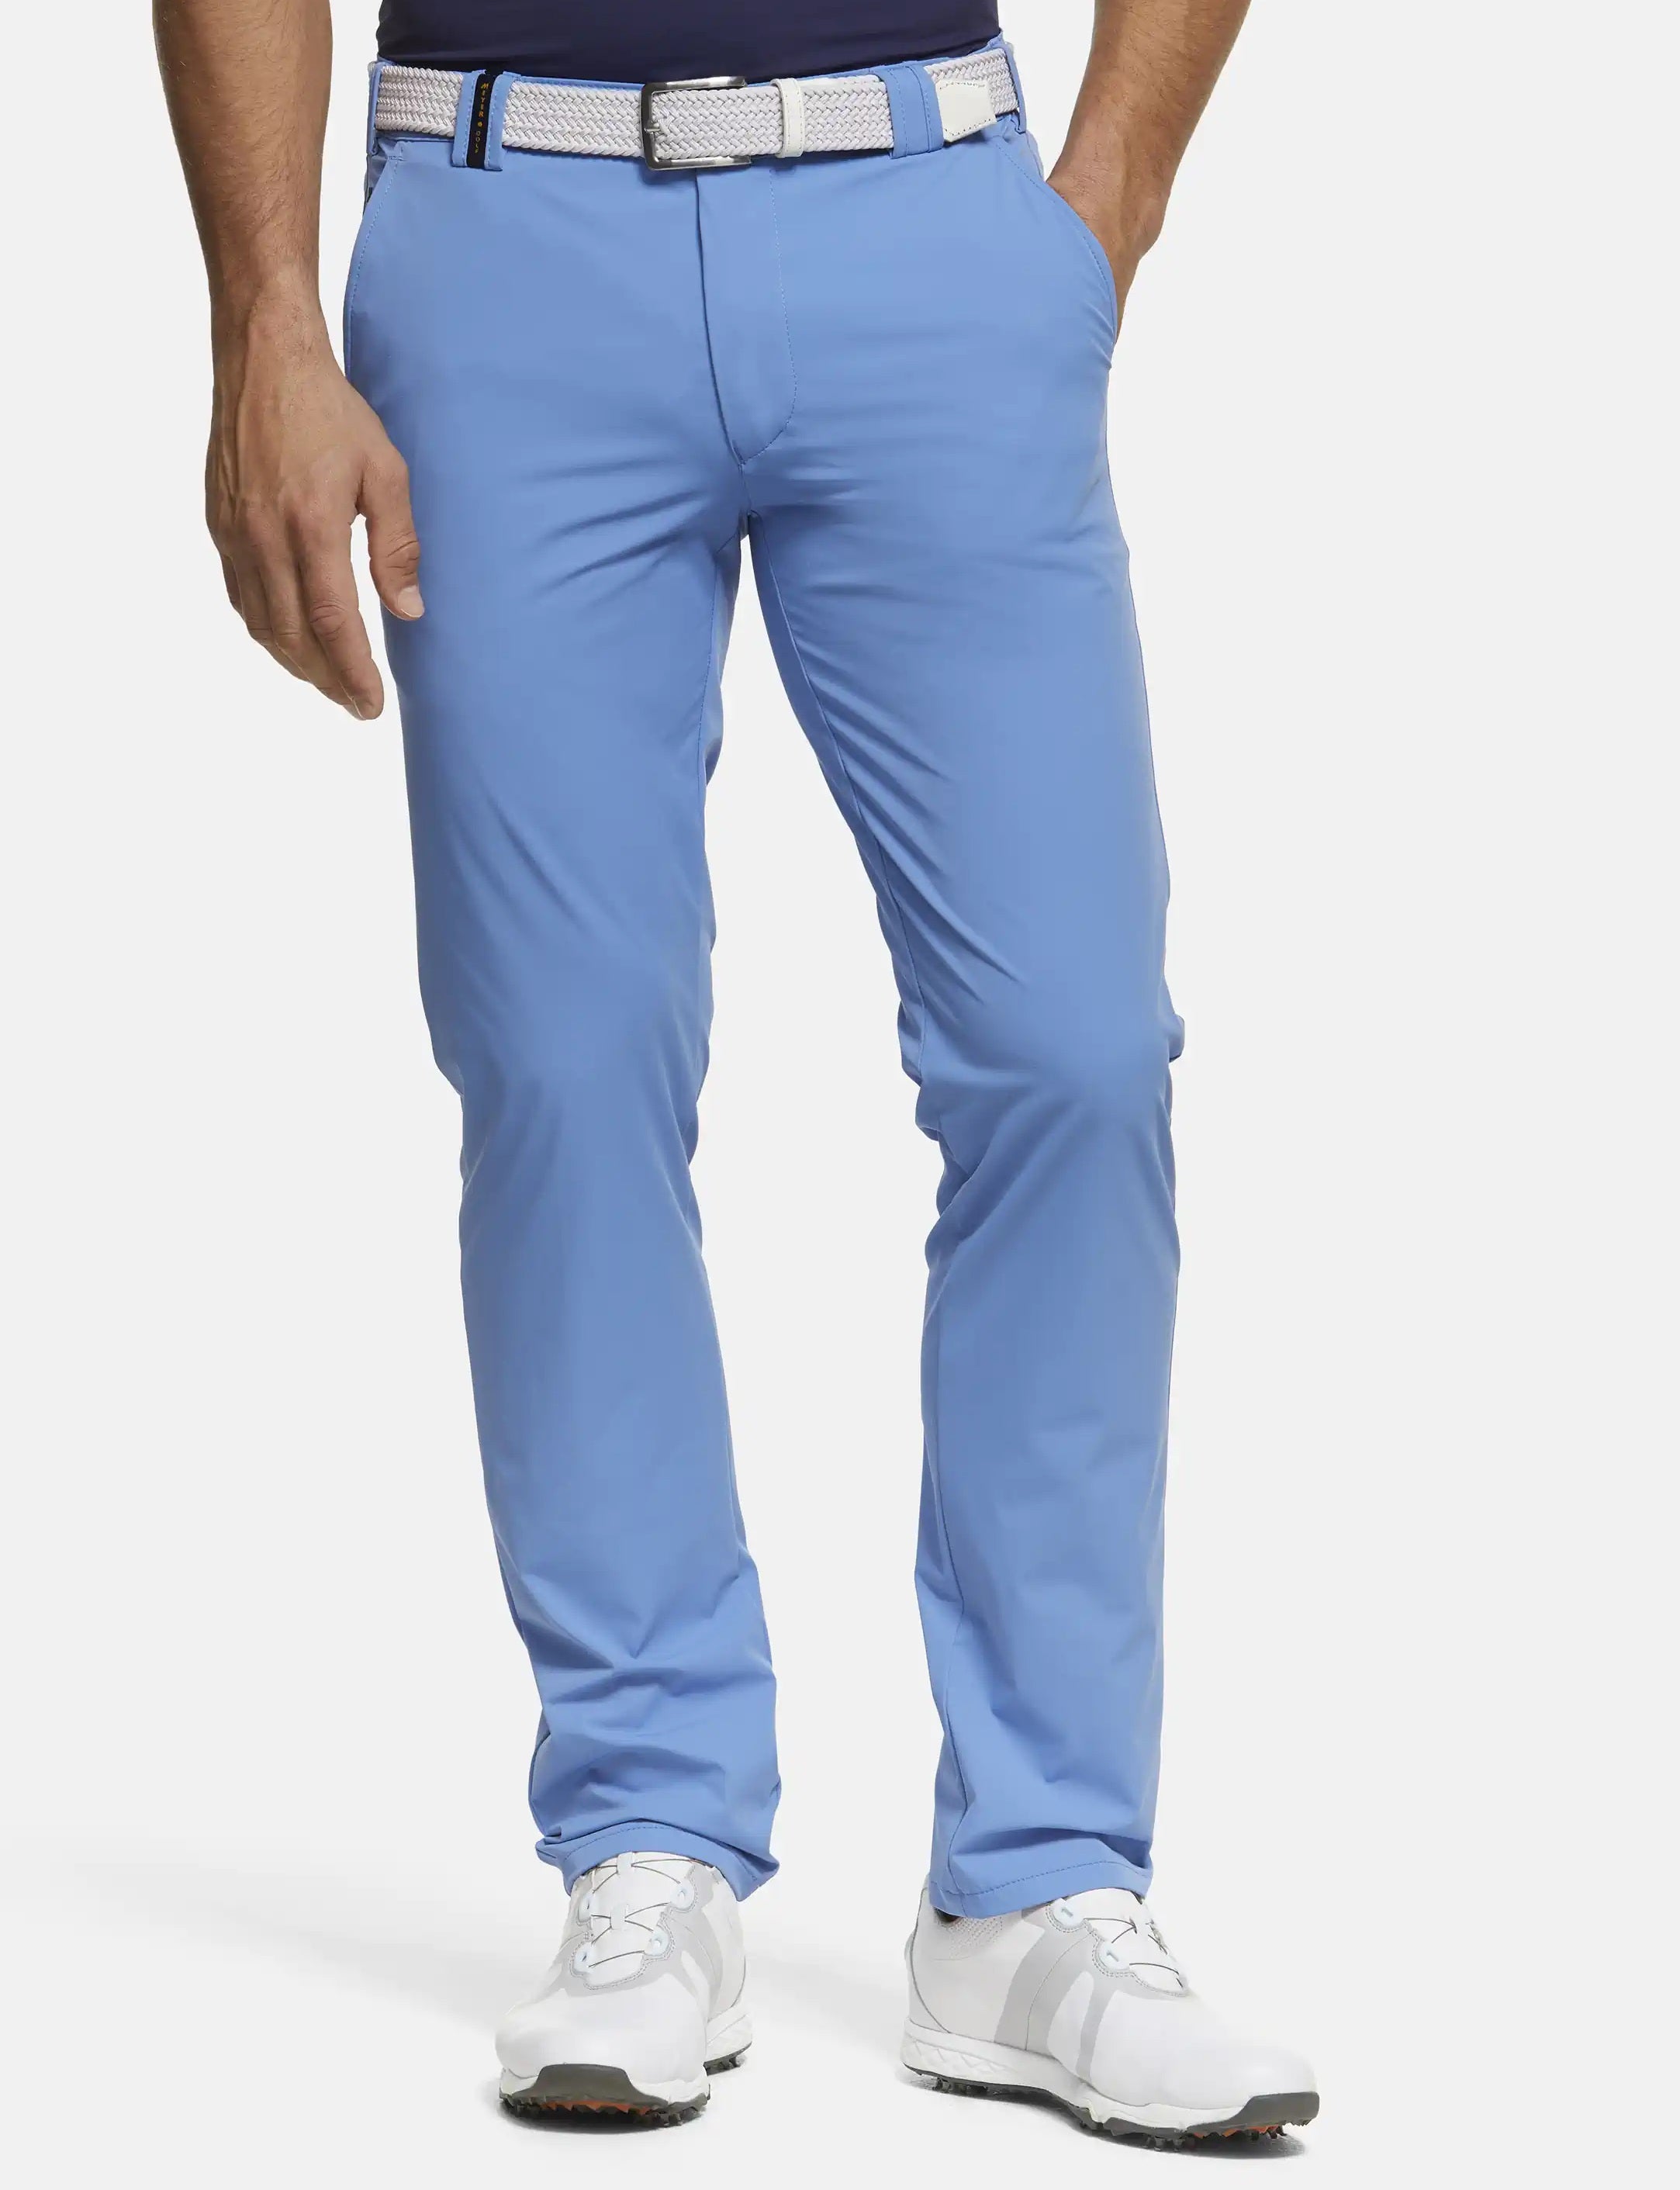 30% OFF - MEYER Golf Trousers - Augusta 8070 High Performance Chinos - Light Blue - Size: 32 SHORT